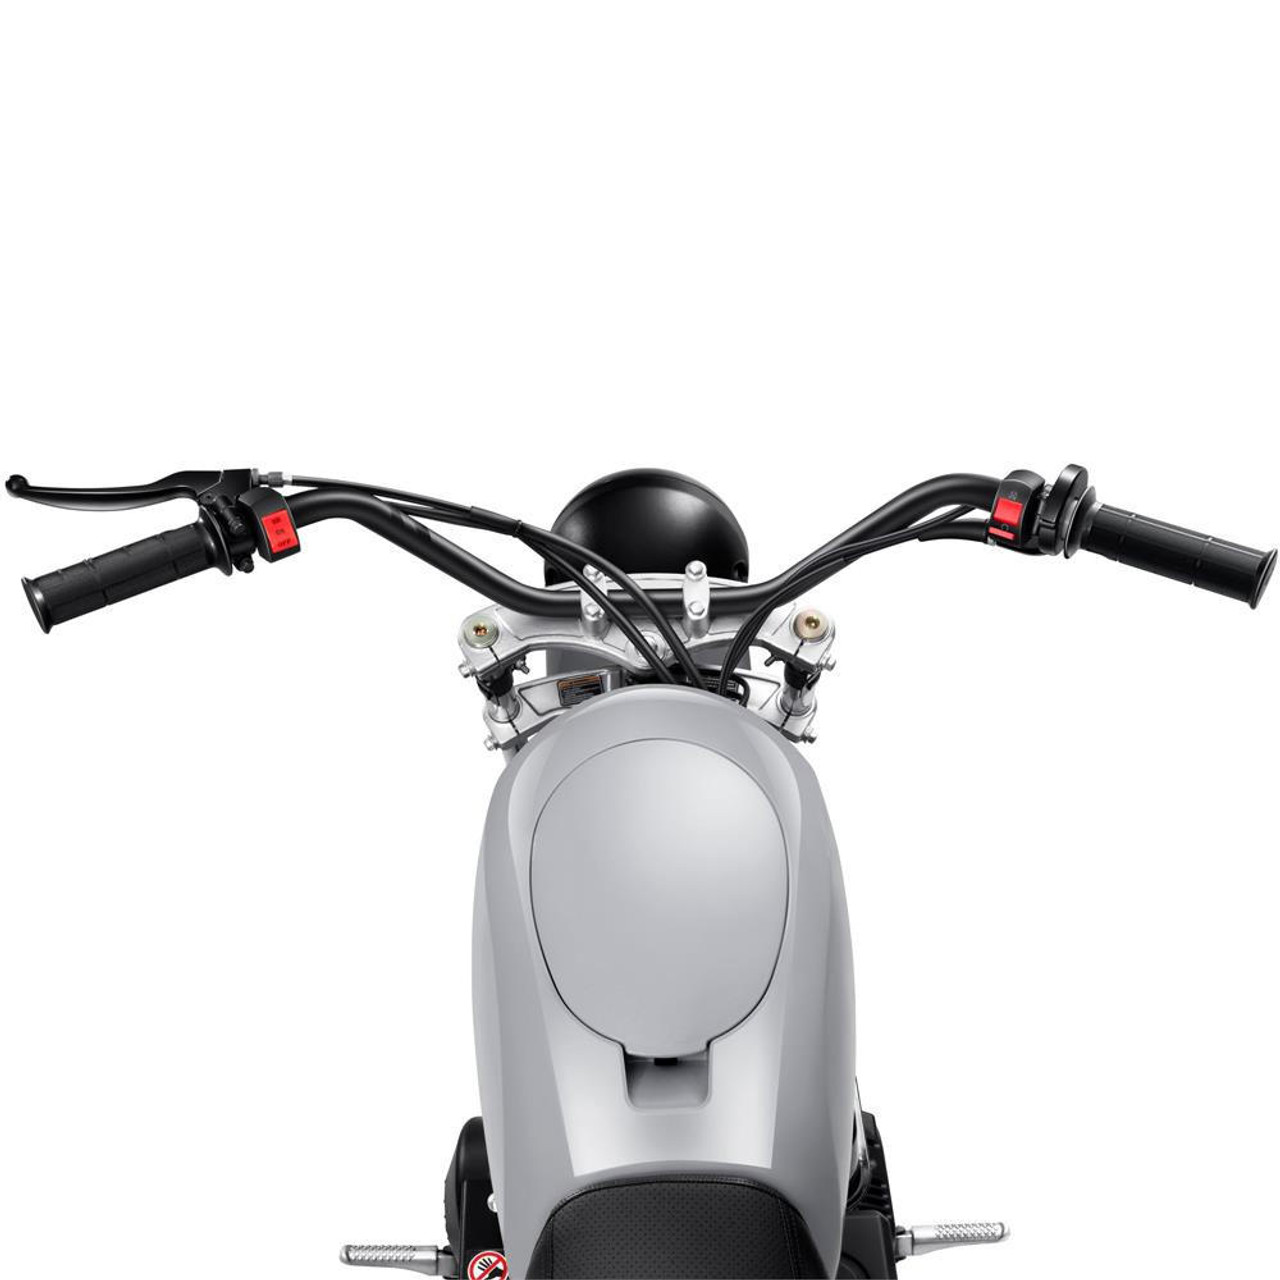  Mototec Trailcross 200cc 4-stroke Gas Mini Bike Grey 